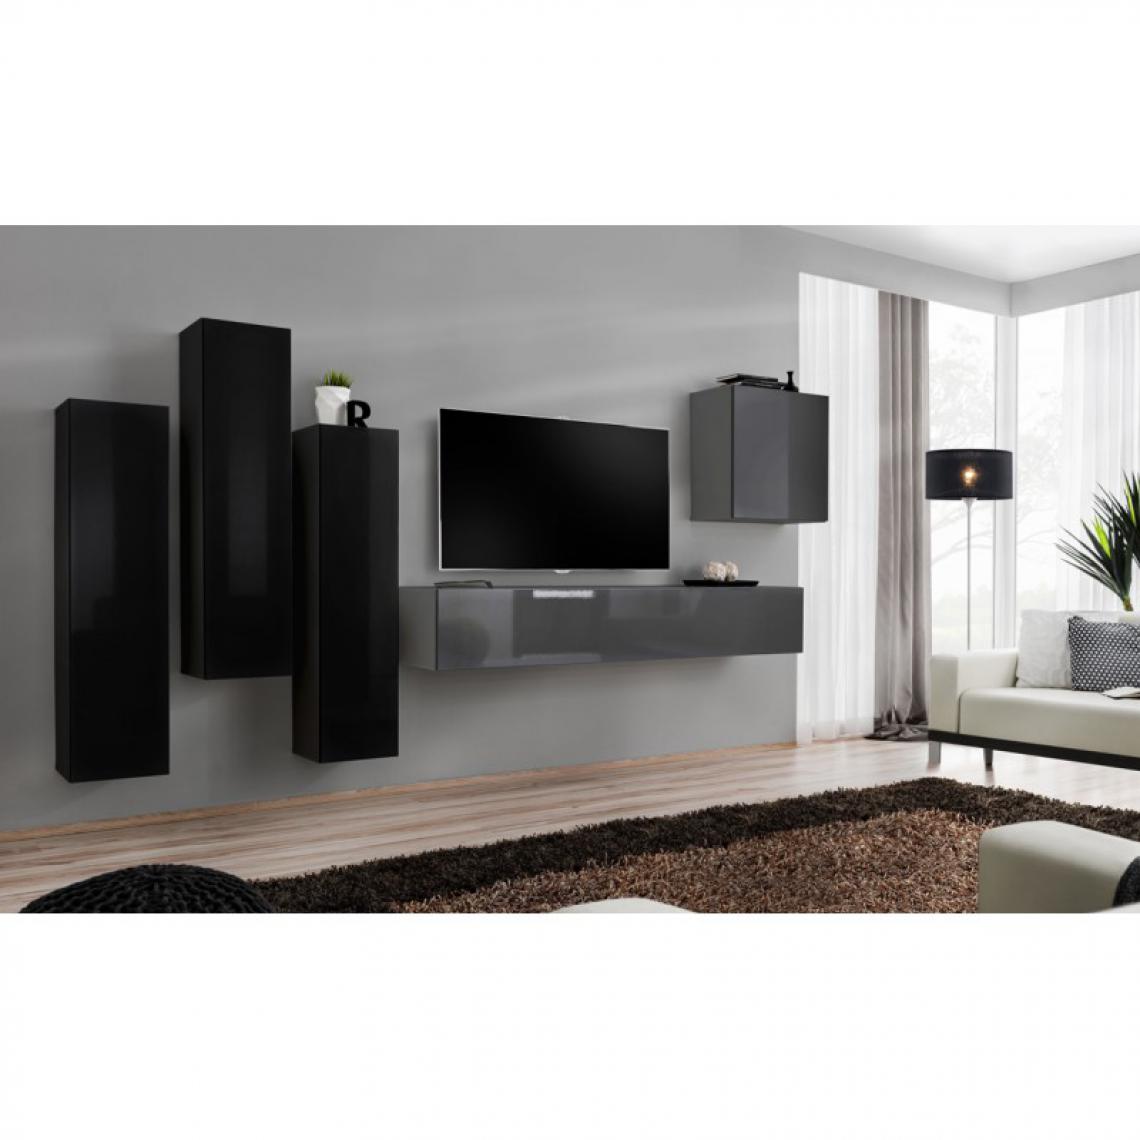 Ac-Deco - Meuble TV Mural Design Switch III 330cm Noir & Gris - Meubles TV, Hi-Fi